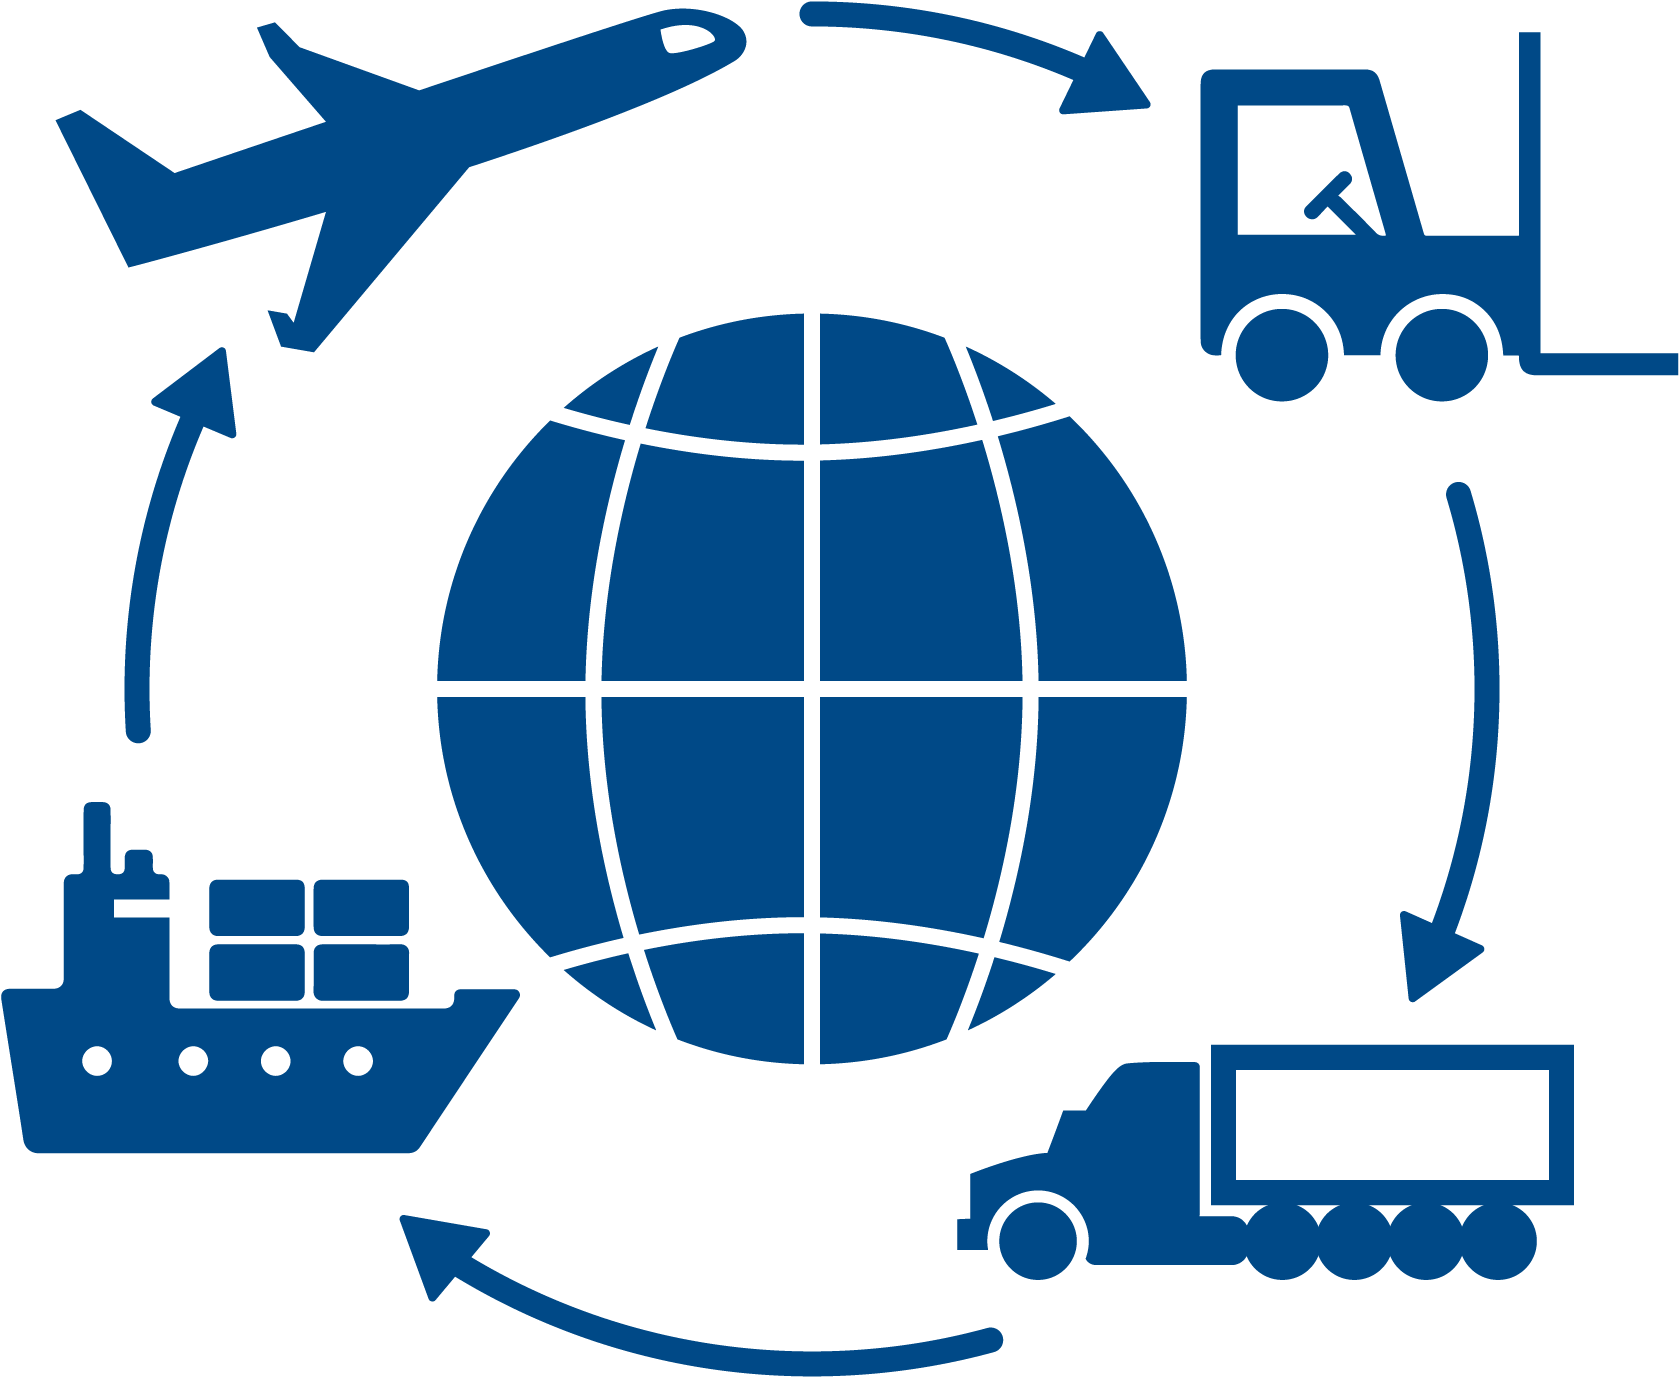 Global Logistics Network Graphic